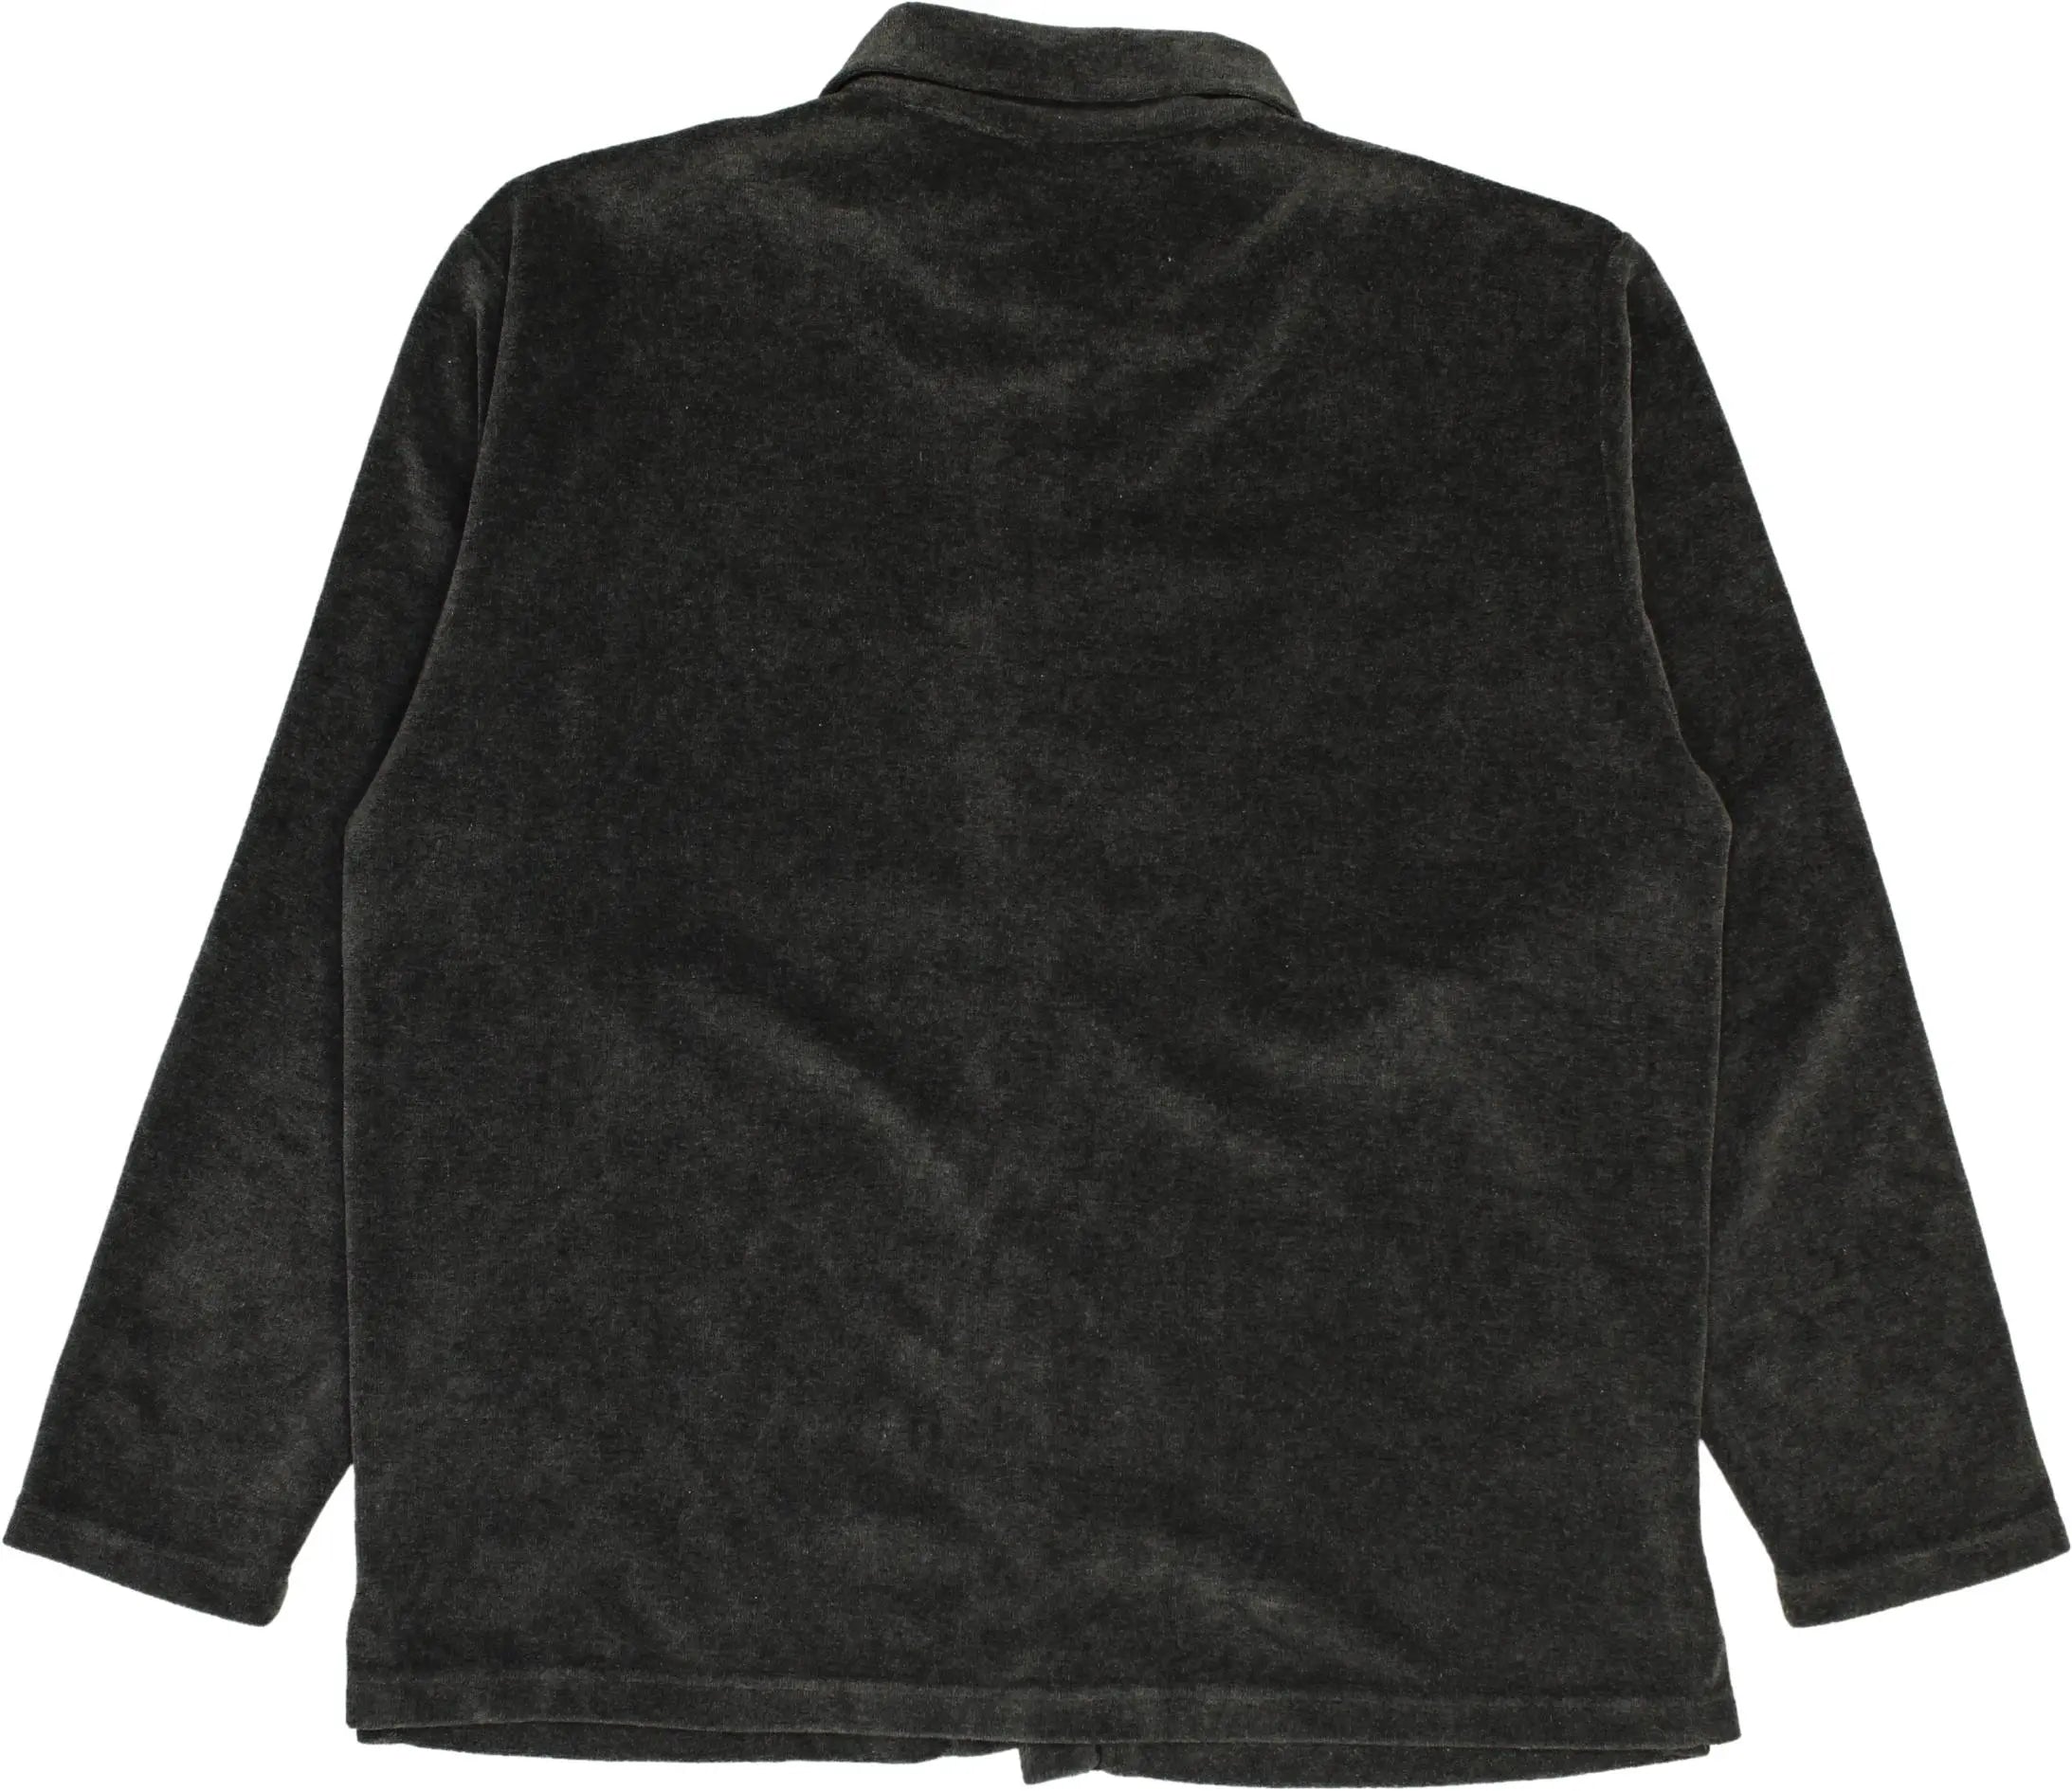 Good Match - Velvet Shirt- ThriftTale.com - Vintage and second handclothing